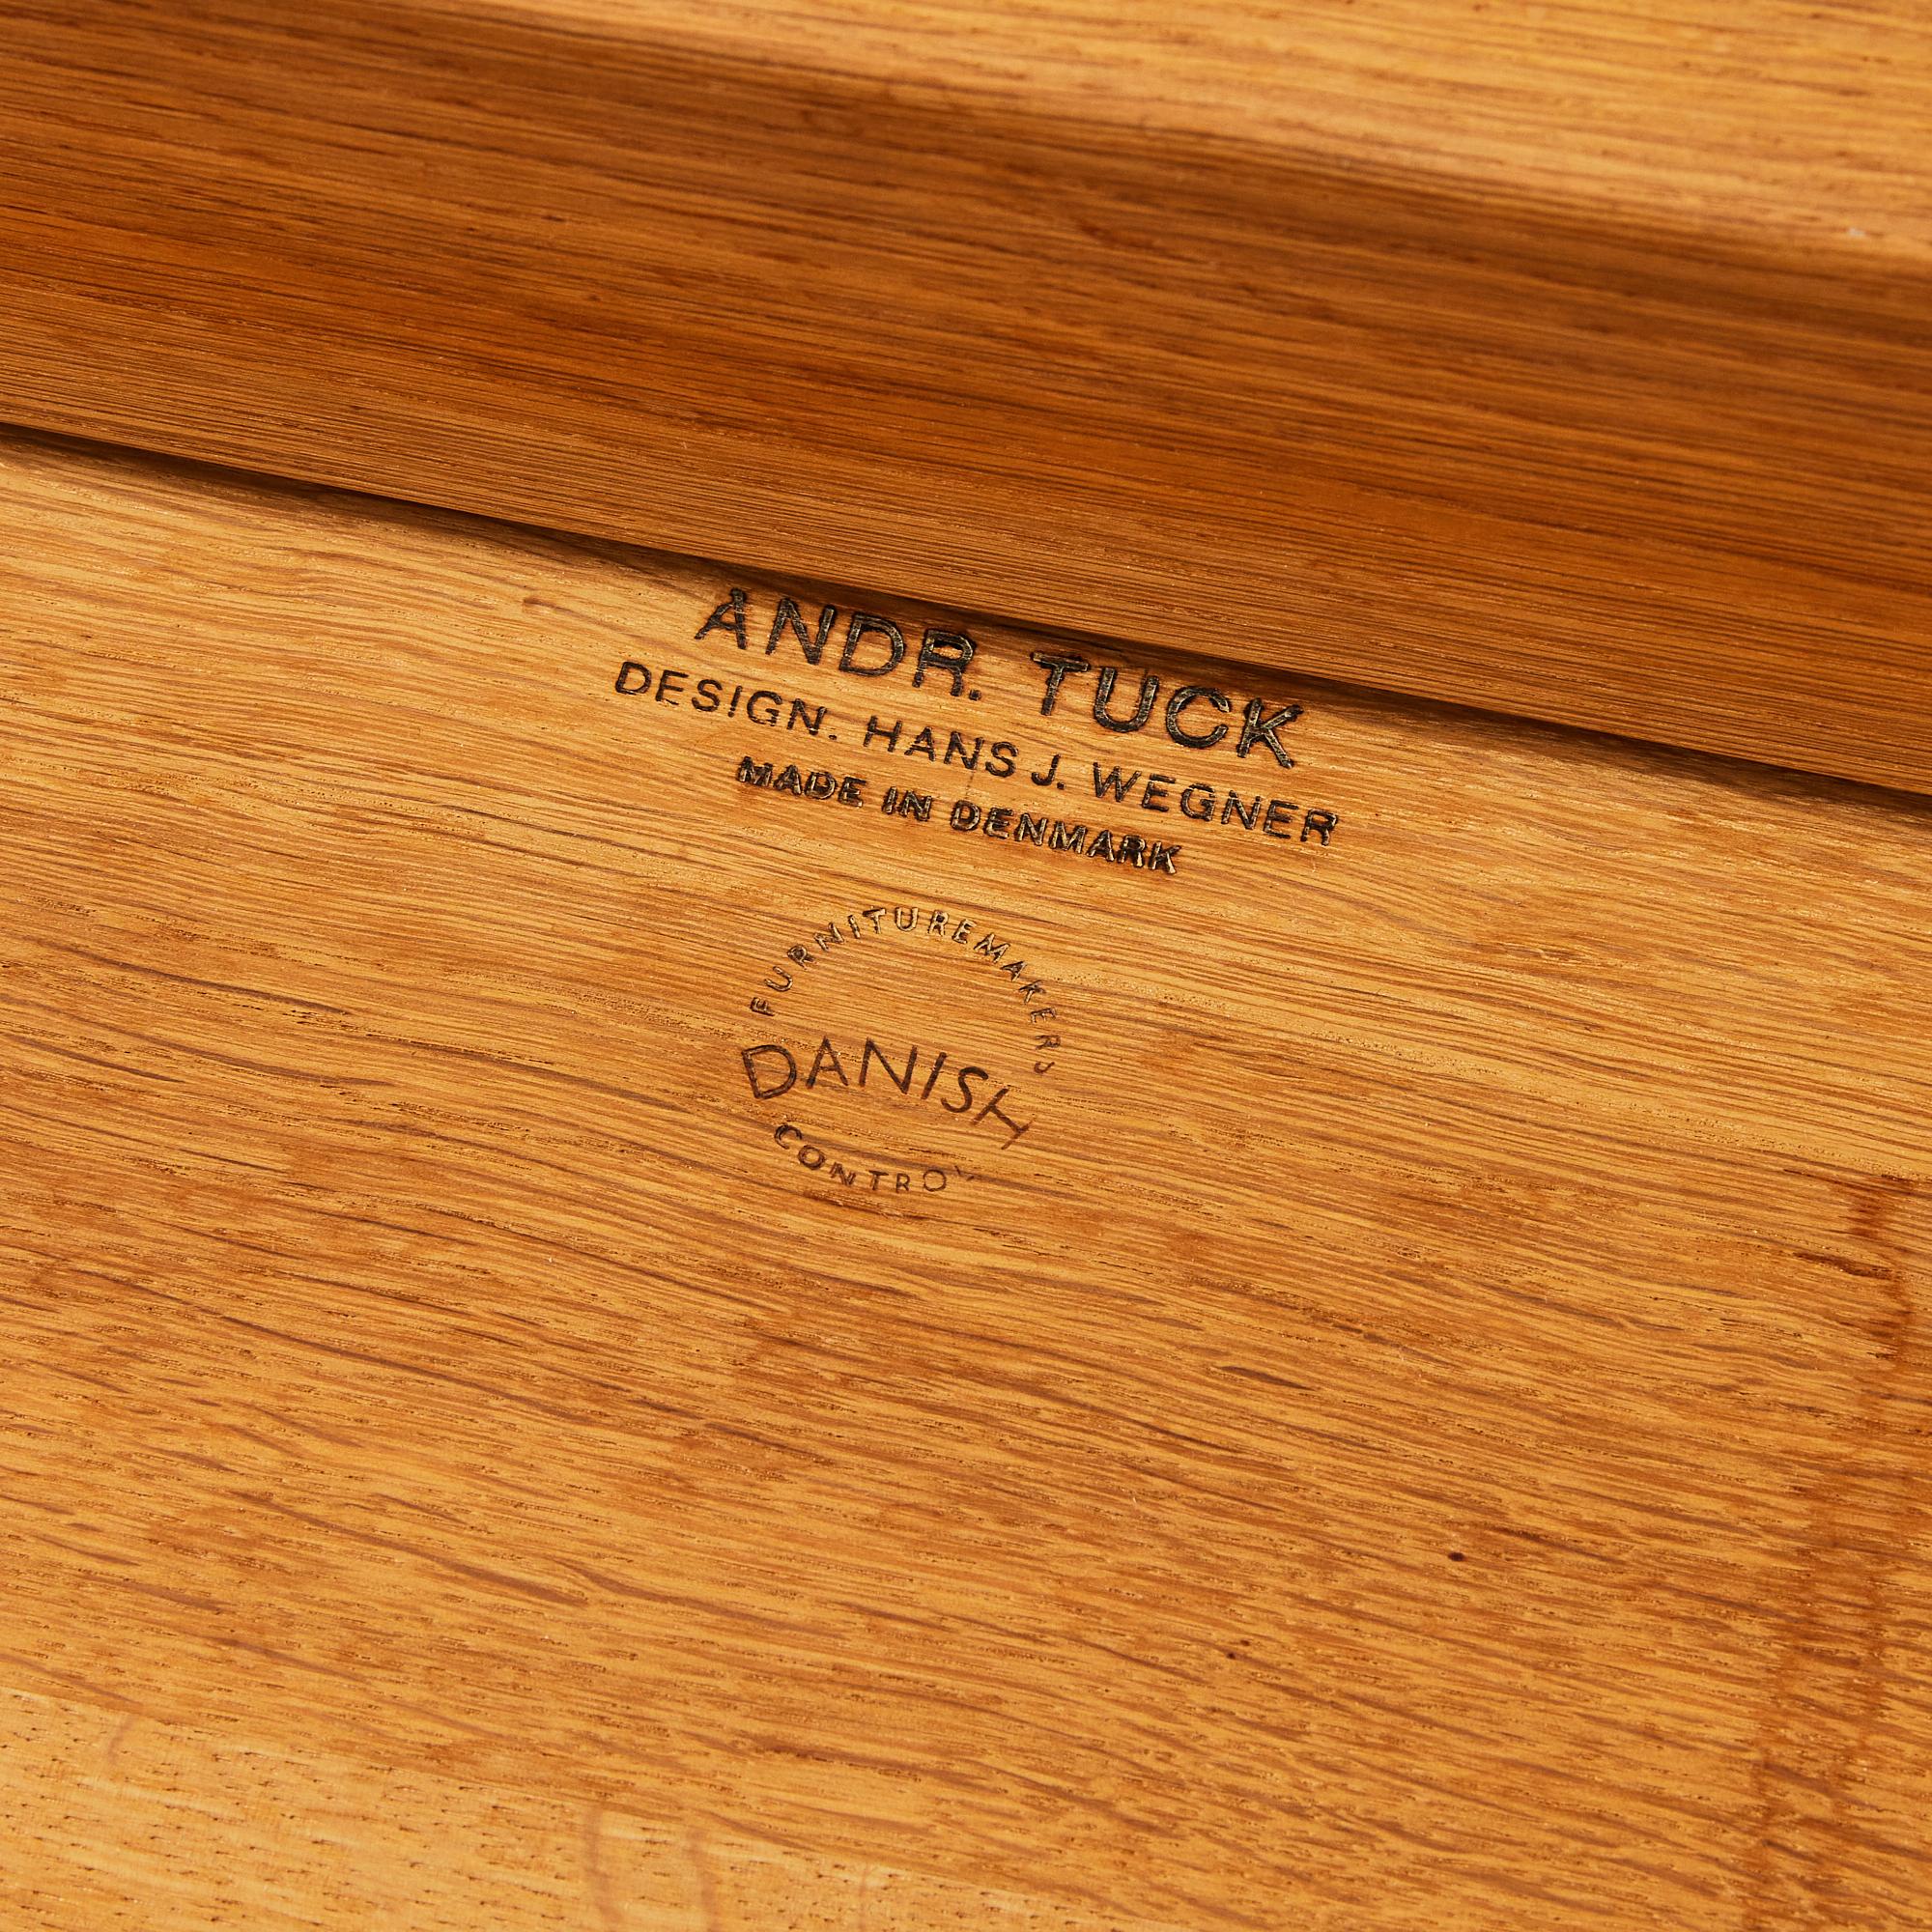 Hans J. Wegner Solid Oak Coffee Table, Andreas Tuck, 1960's For Sale 7